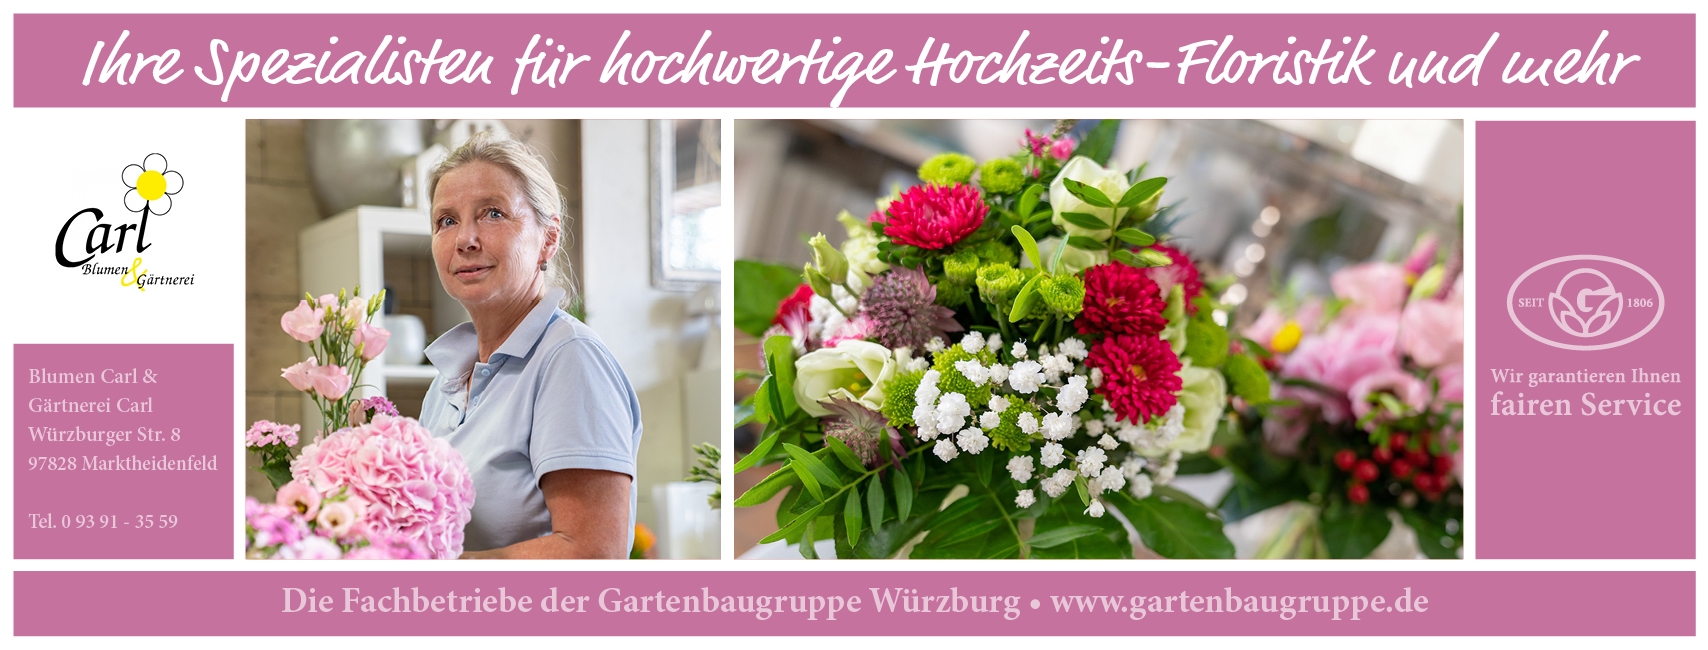 Blumen & Gärtnerei Carl - Gartenbaugruppe Würzburg